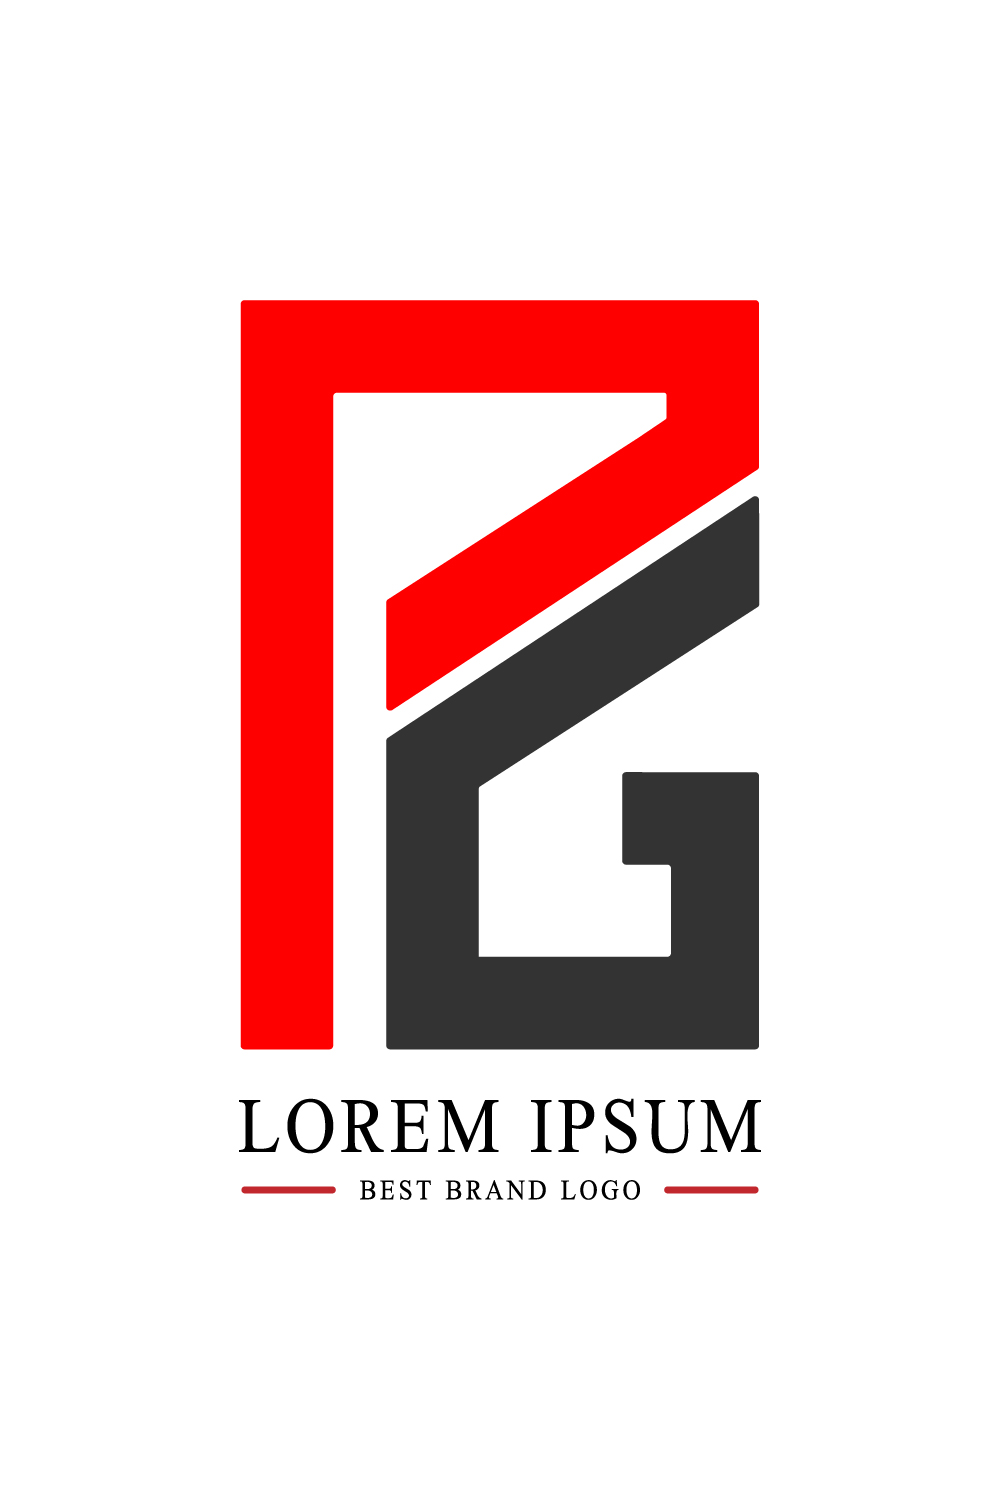 Initials PG letters logo design vector images design PG logo red and black color royalty GP logo design company template illustration pinterest preview image.